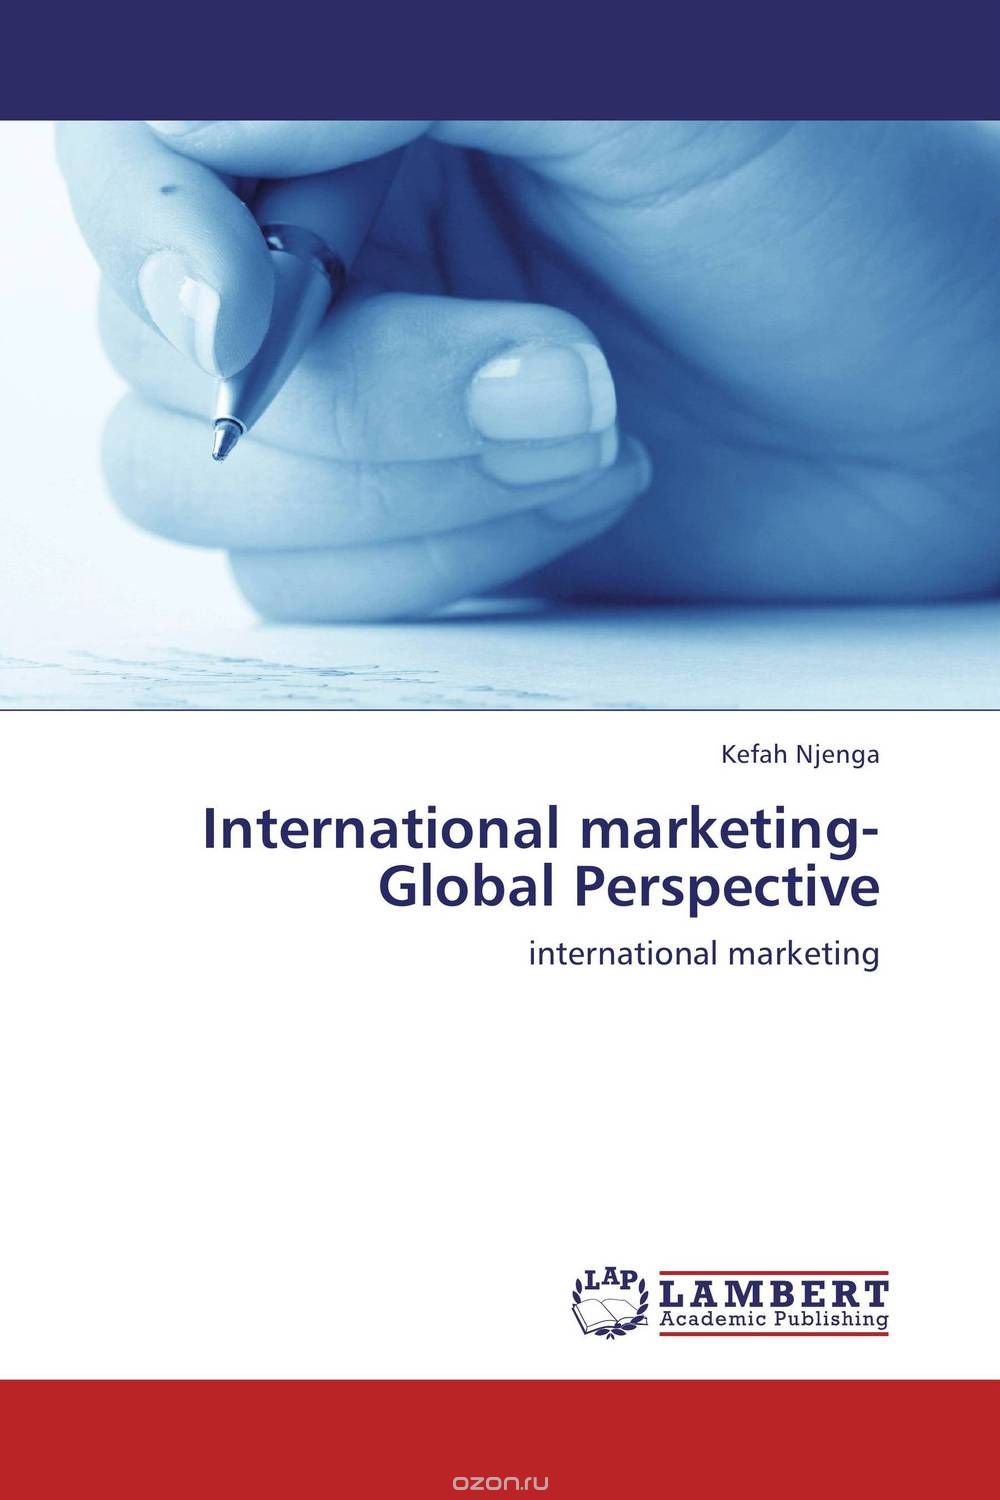 Скачать книгу "International marketing- Global Perspective"